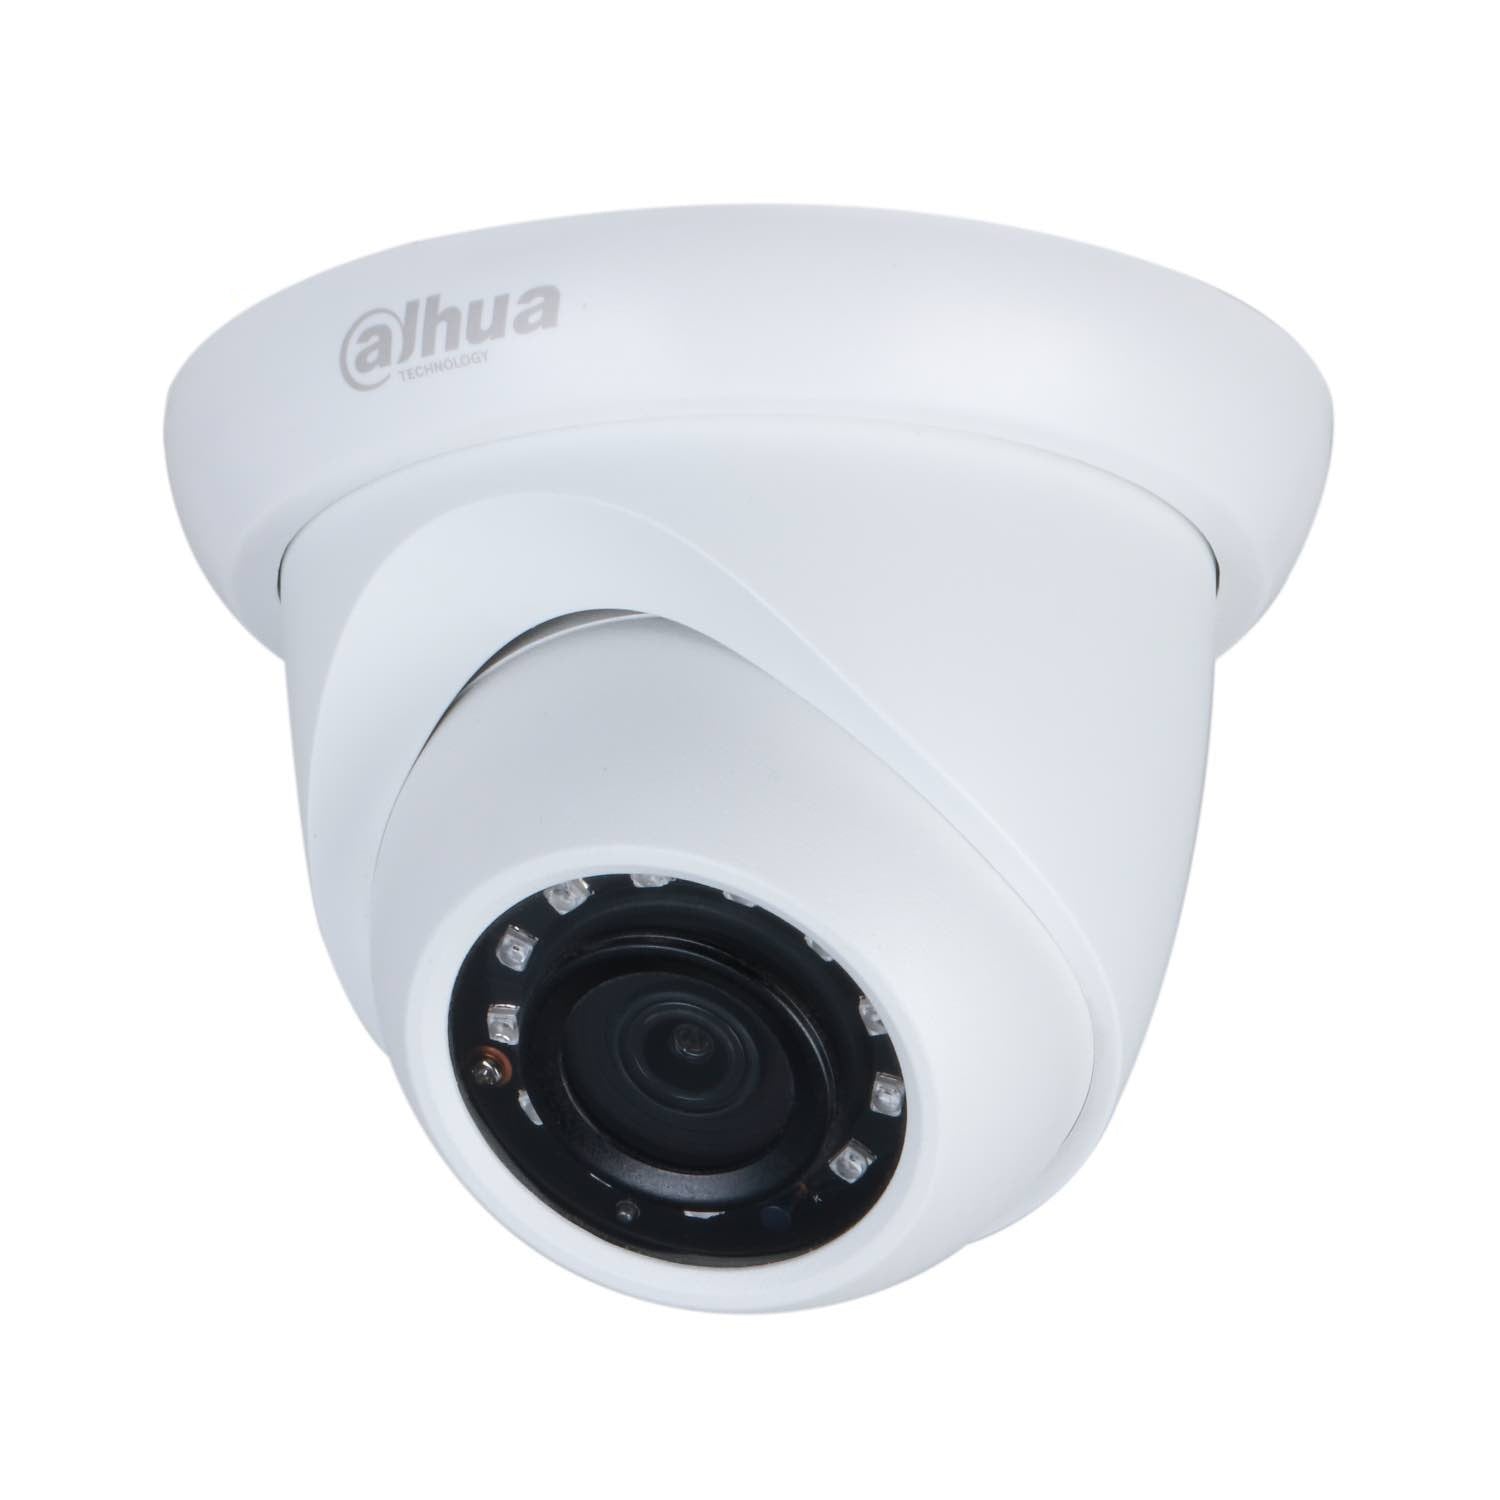 Dahua 2MP IP Dome Camera DH-IPC-HDW1230SP-S4